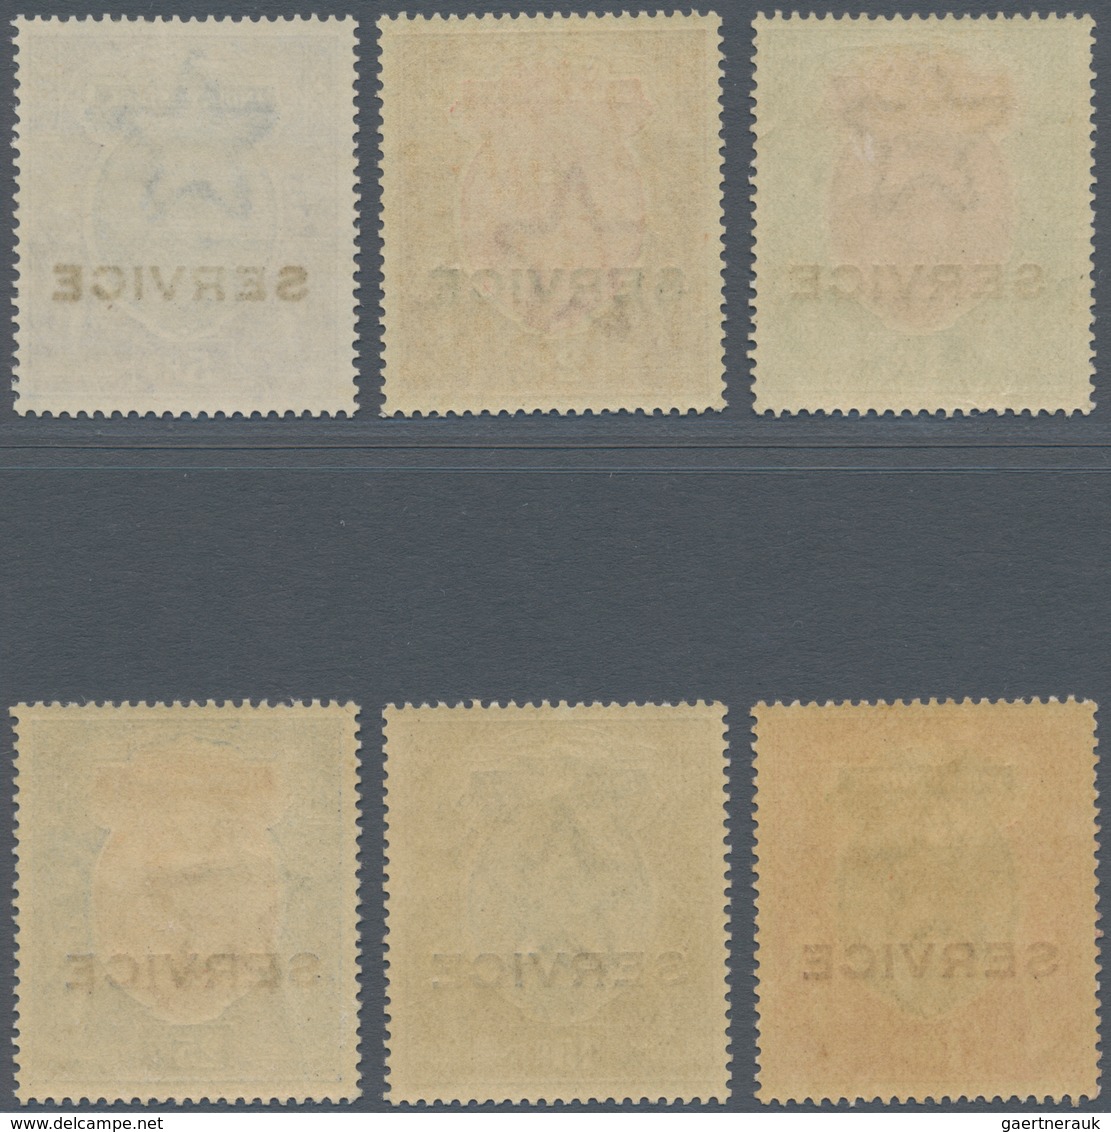 Indien - Dienstmarken: 1912-13 KGV. High Values 1r. To 25r., Wmk Star, Optd. "SERVICE", Mint Very Li - Timbres De Service